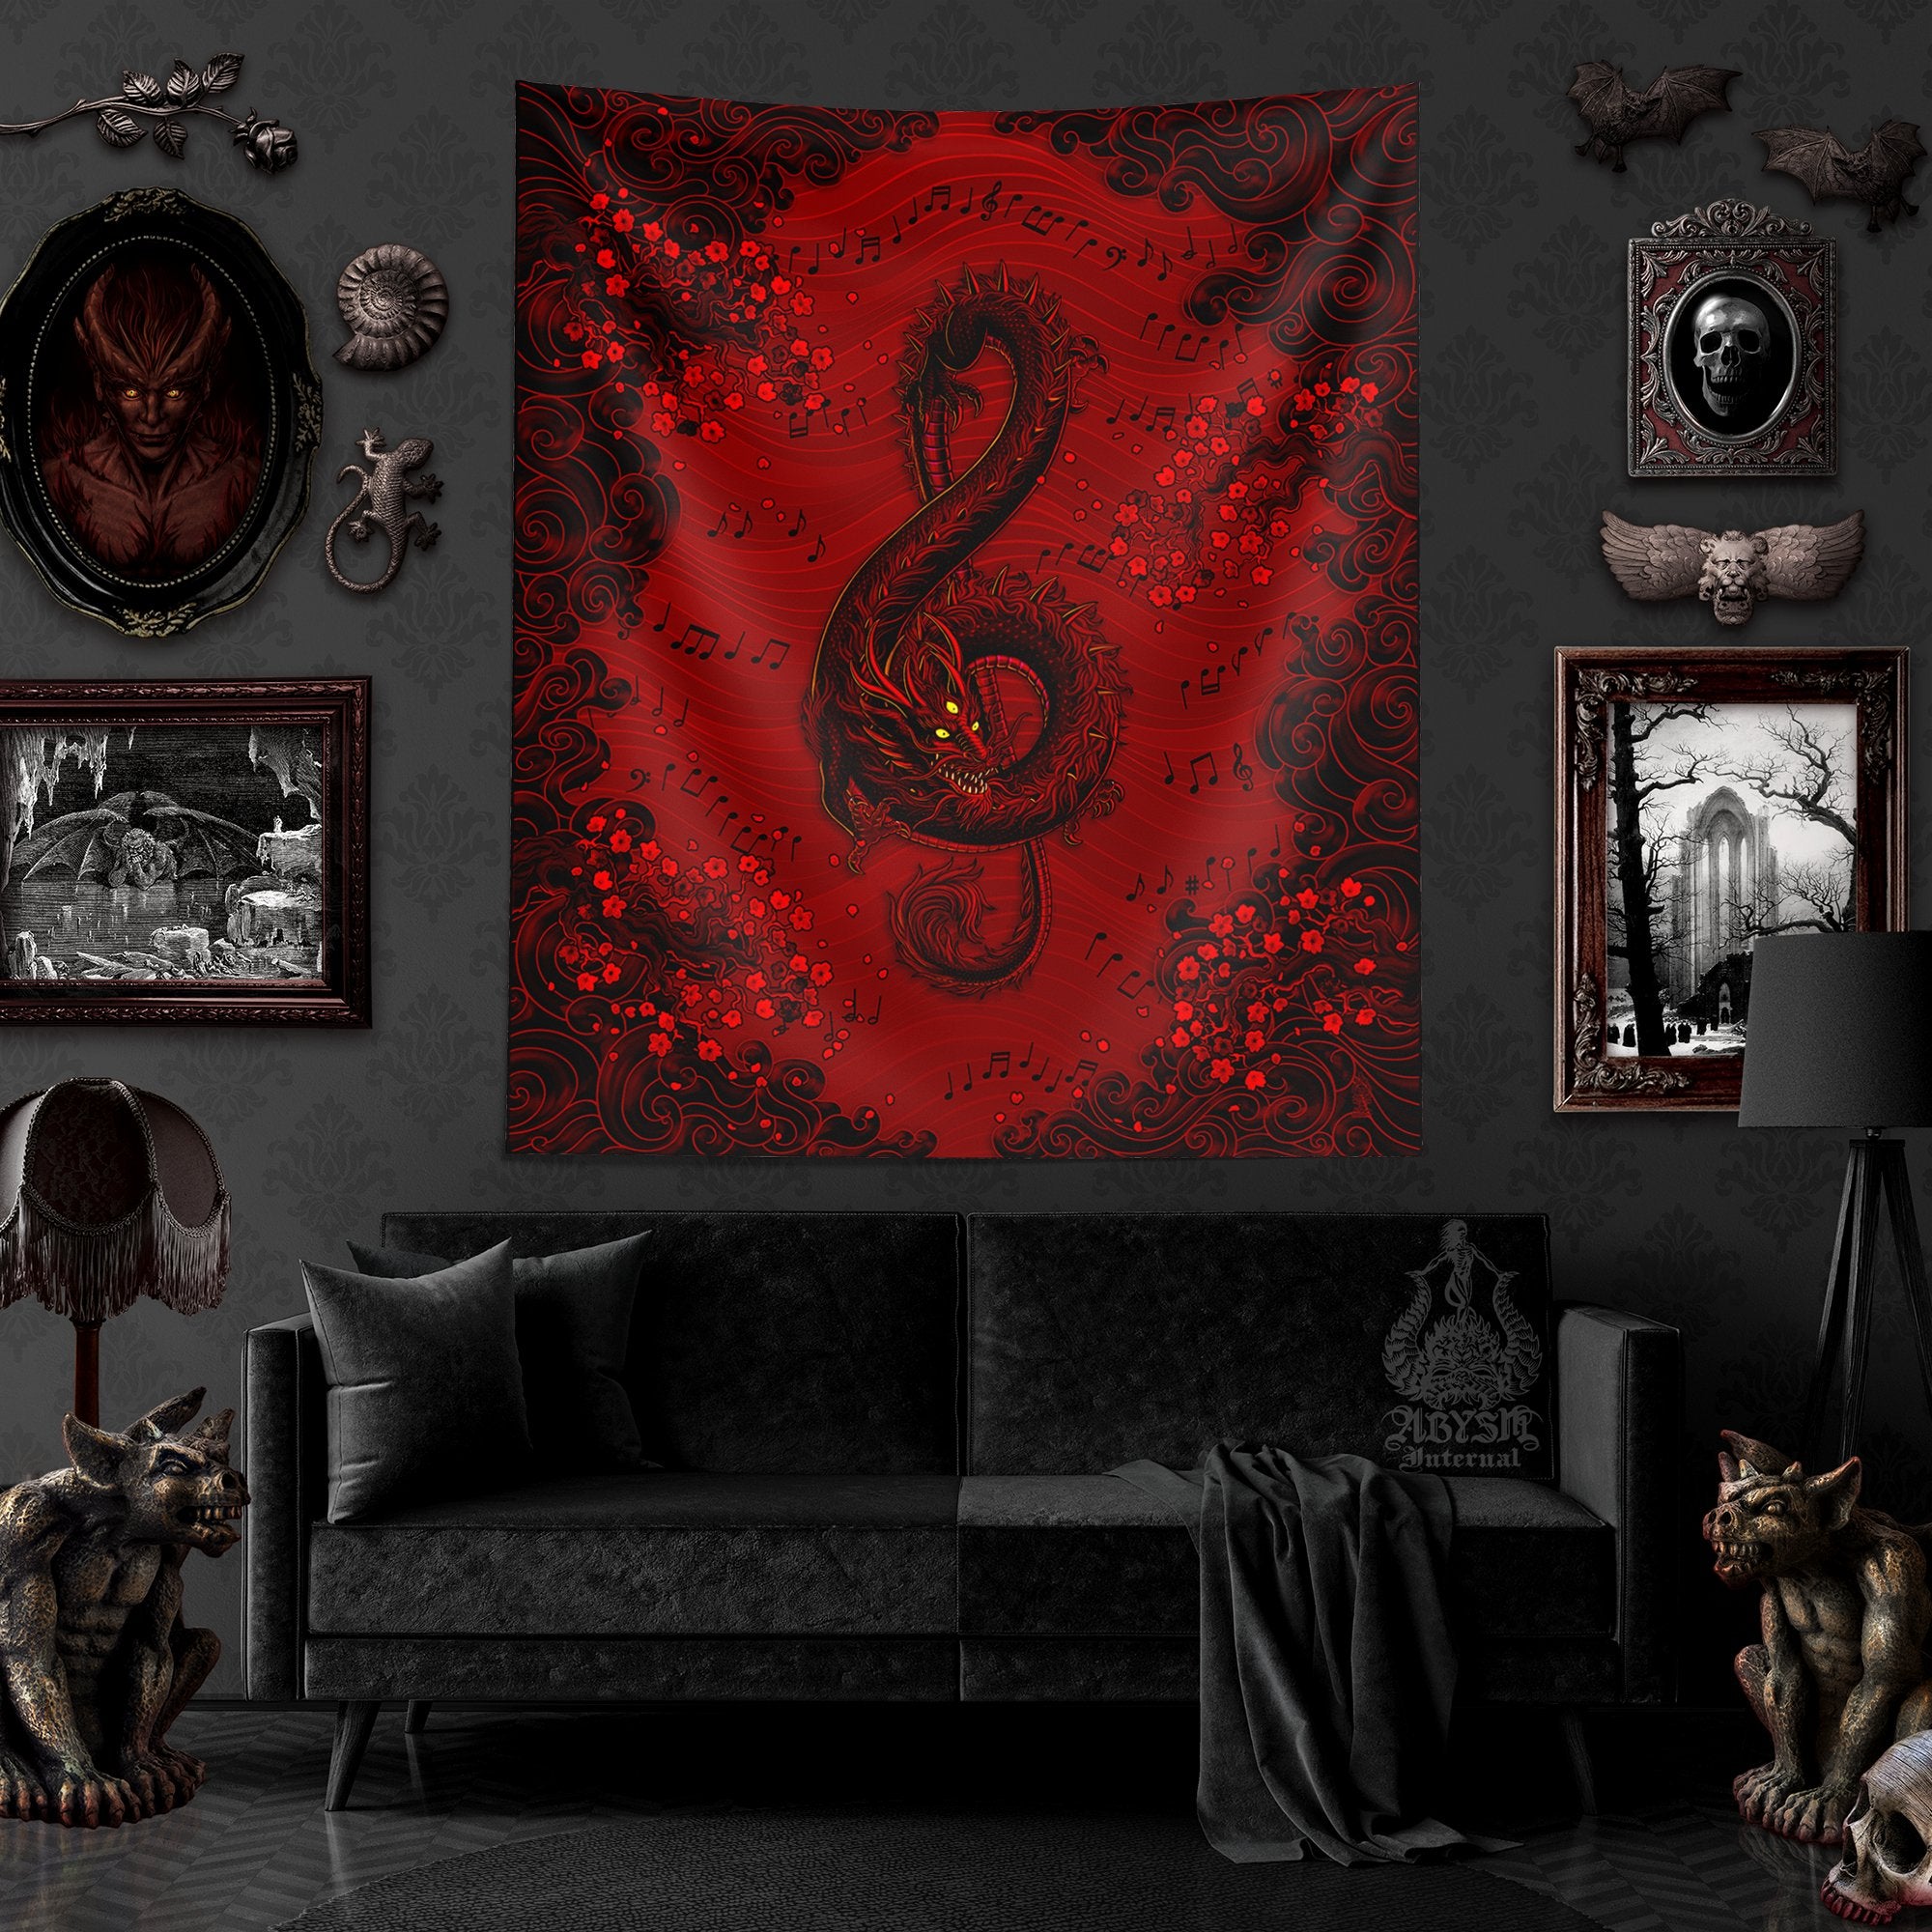 Goth Tapestry, Music Wall Hanging, Fantasy Home Decor, Vertical Art Print - Demon Dragon, Treble Clef - Abysm Internal